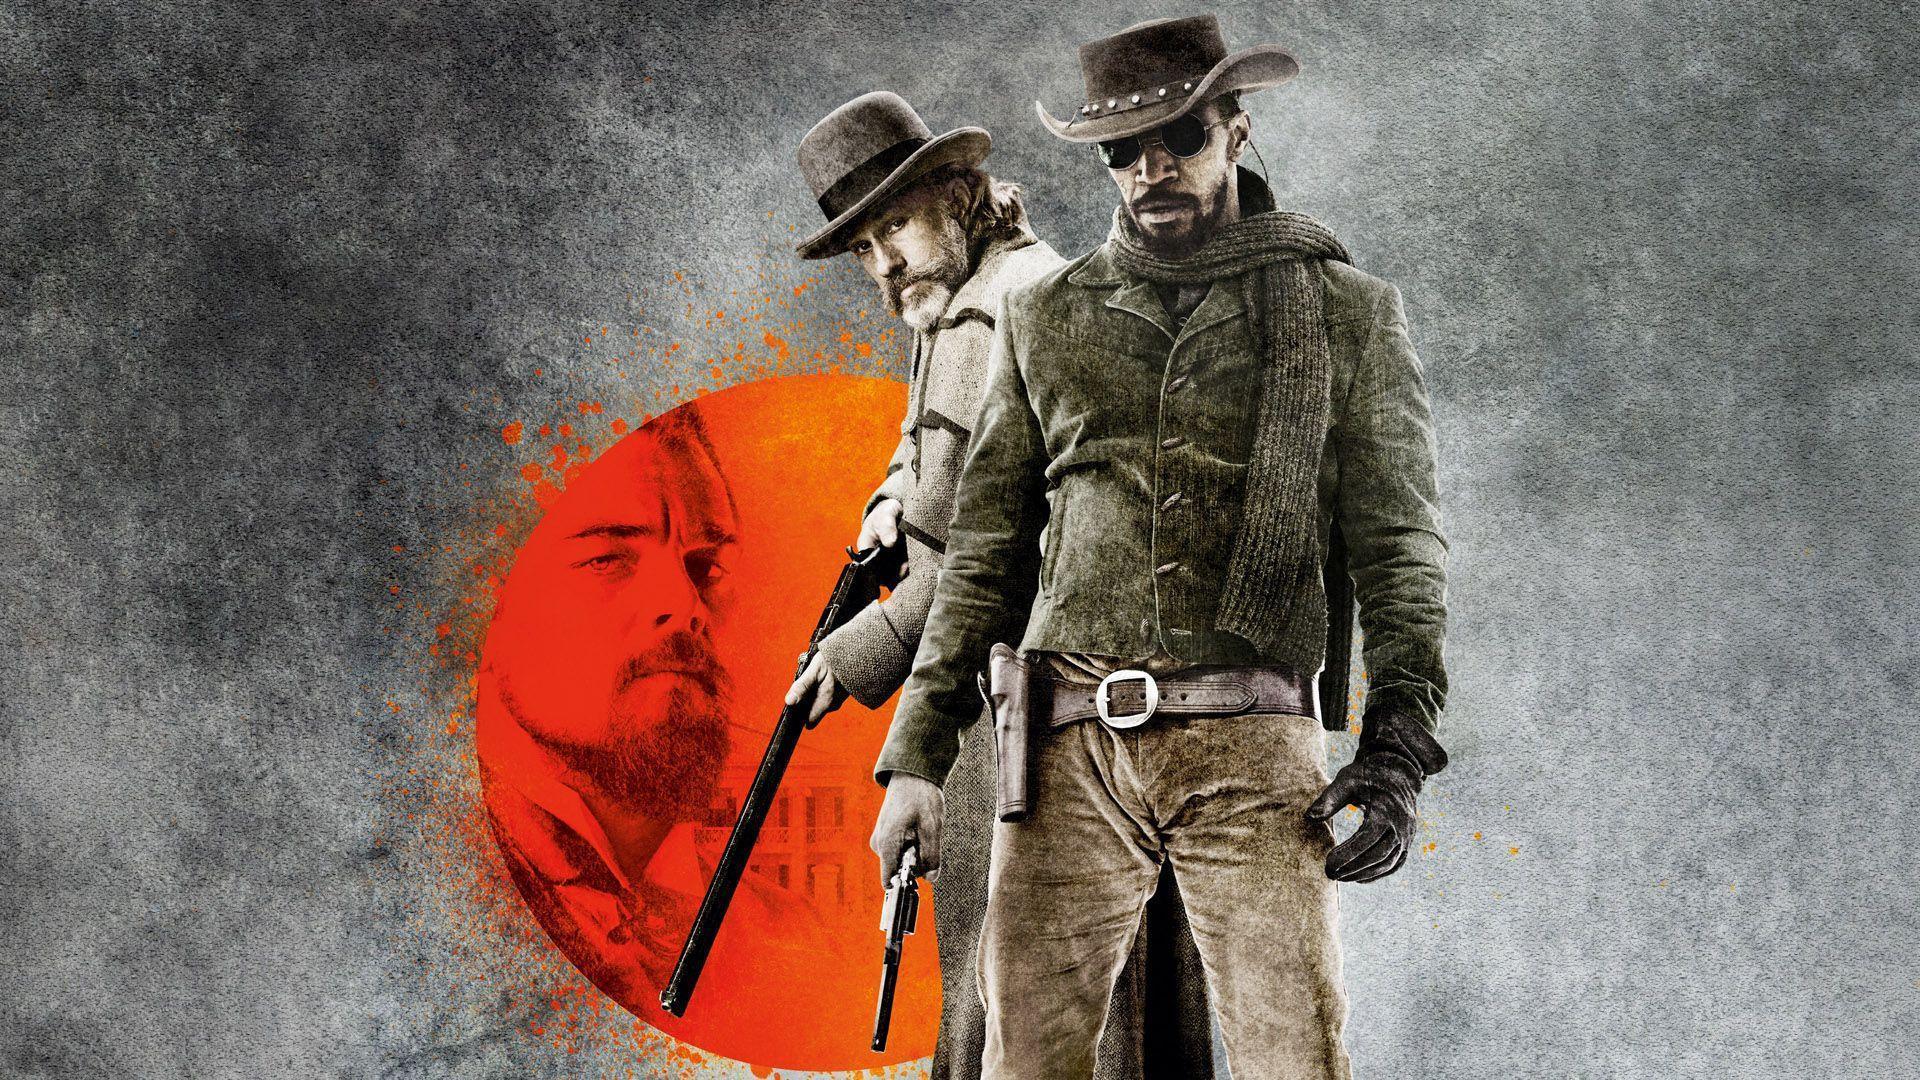 Django Unchained Wallpaper, Picture, Image